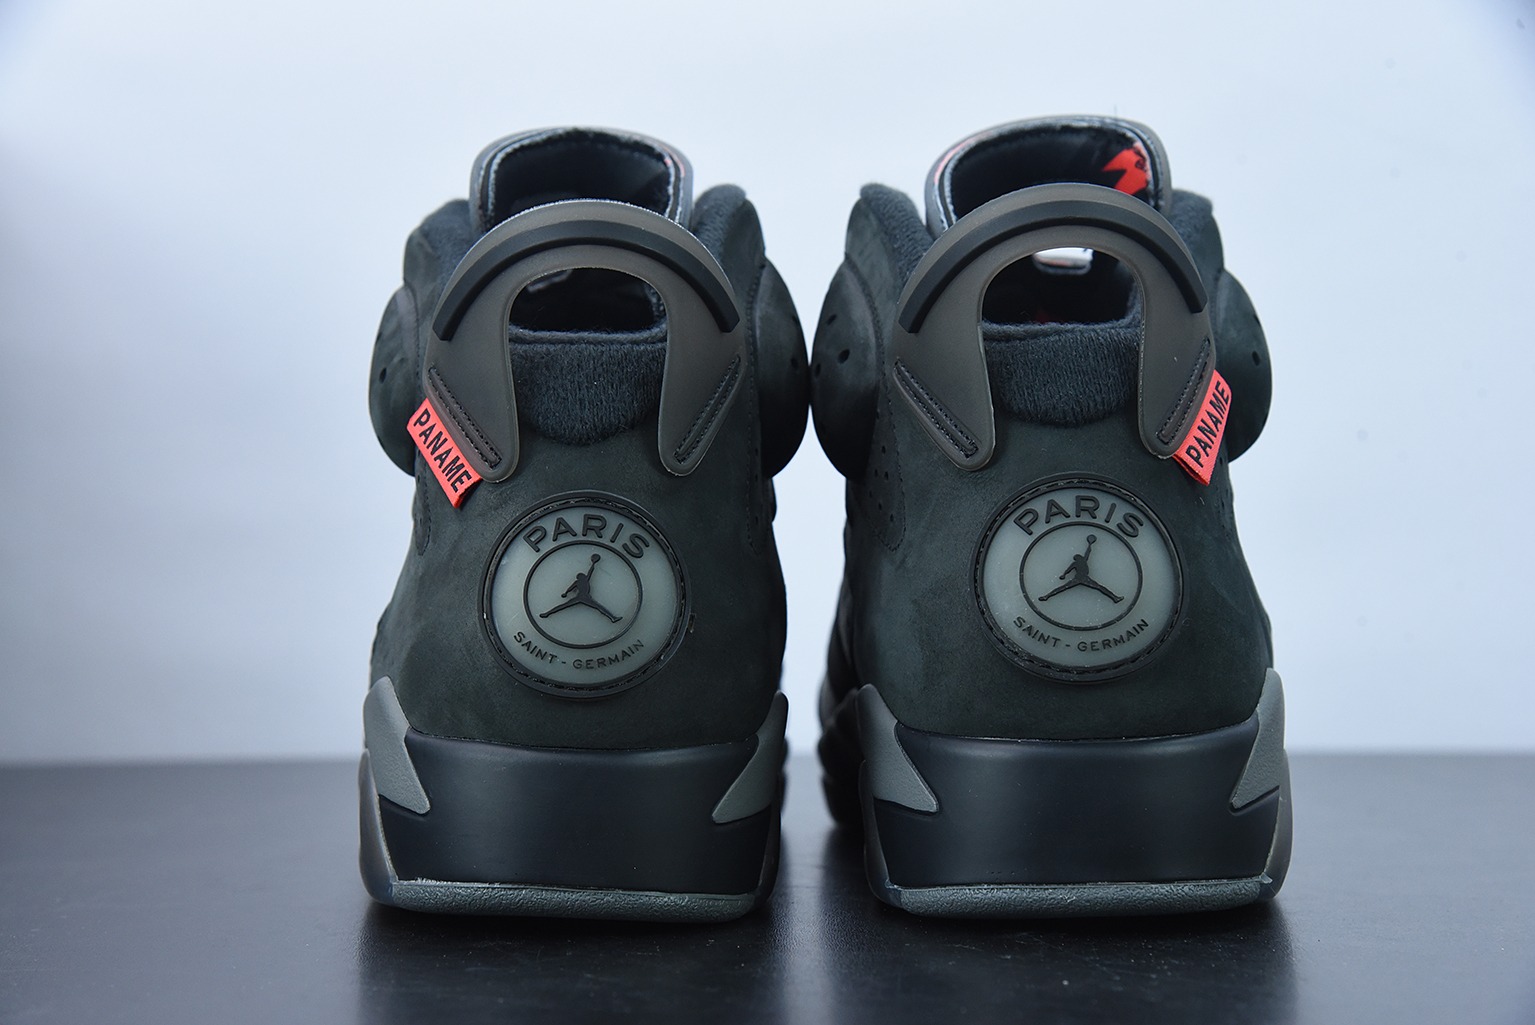 0H0G6  纯原版本 PSG x Air Jordan 6 Retro AJ6 乔6 大巴黎男子篮球鞋 CK1229-001